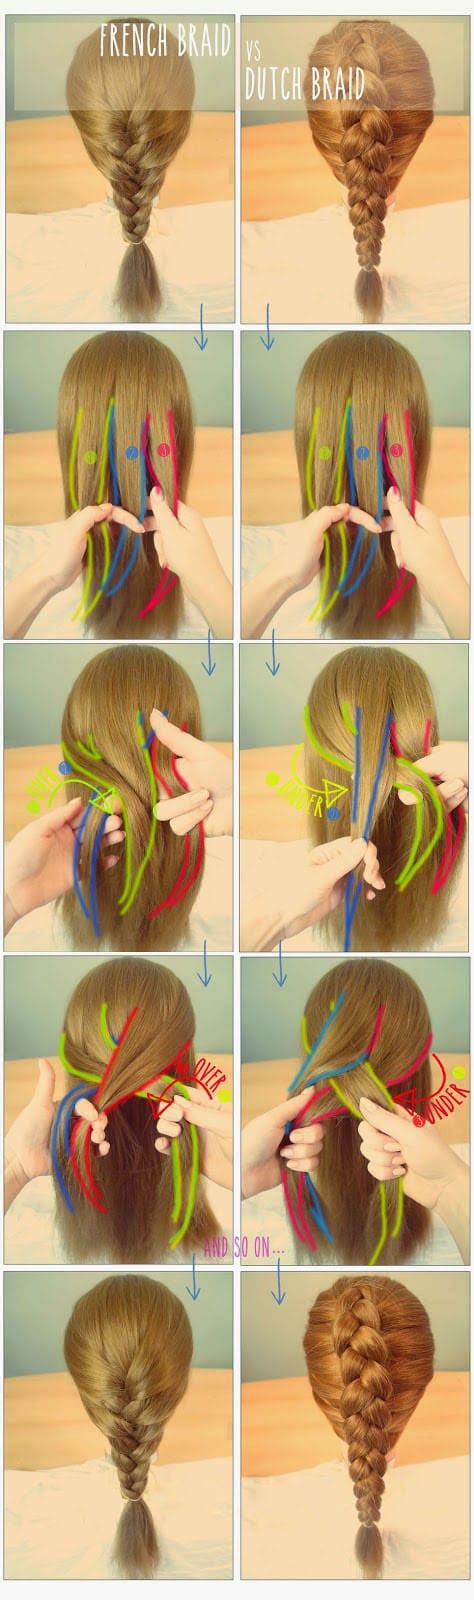 french braid vs dutch braid with step by step picture guide hair queenie